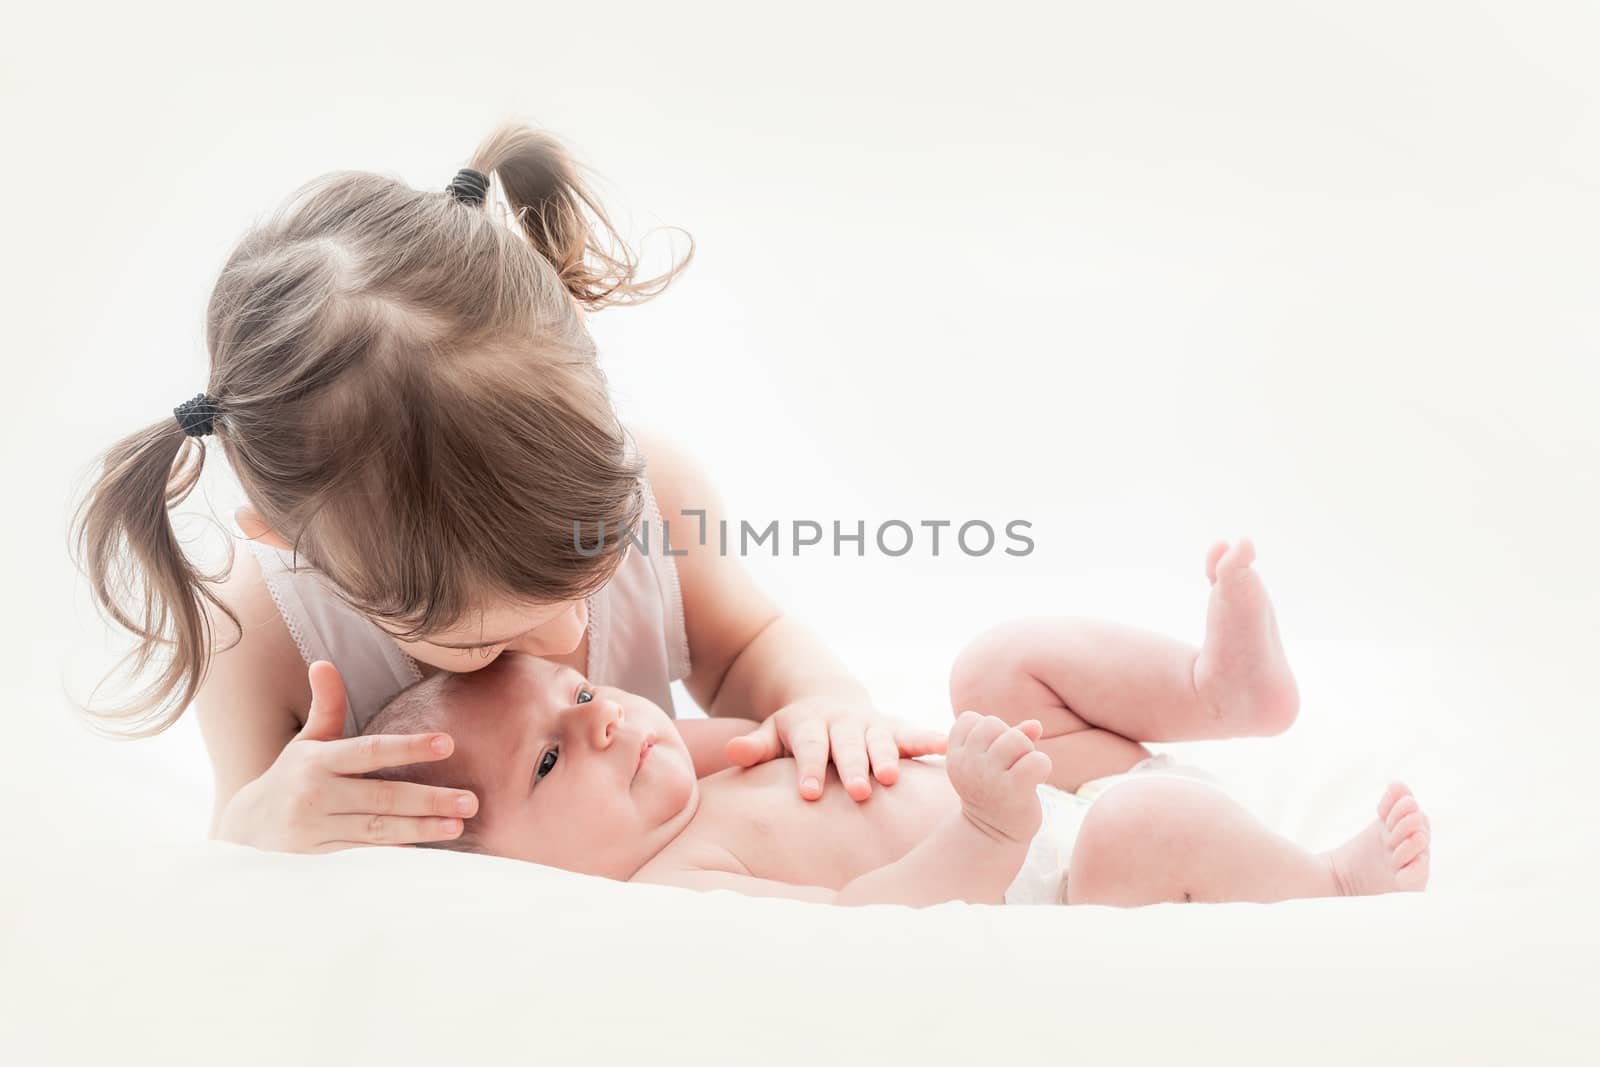 elder sister with the newborn child by sveter